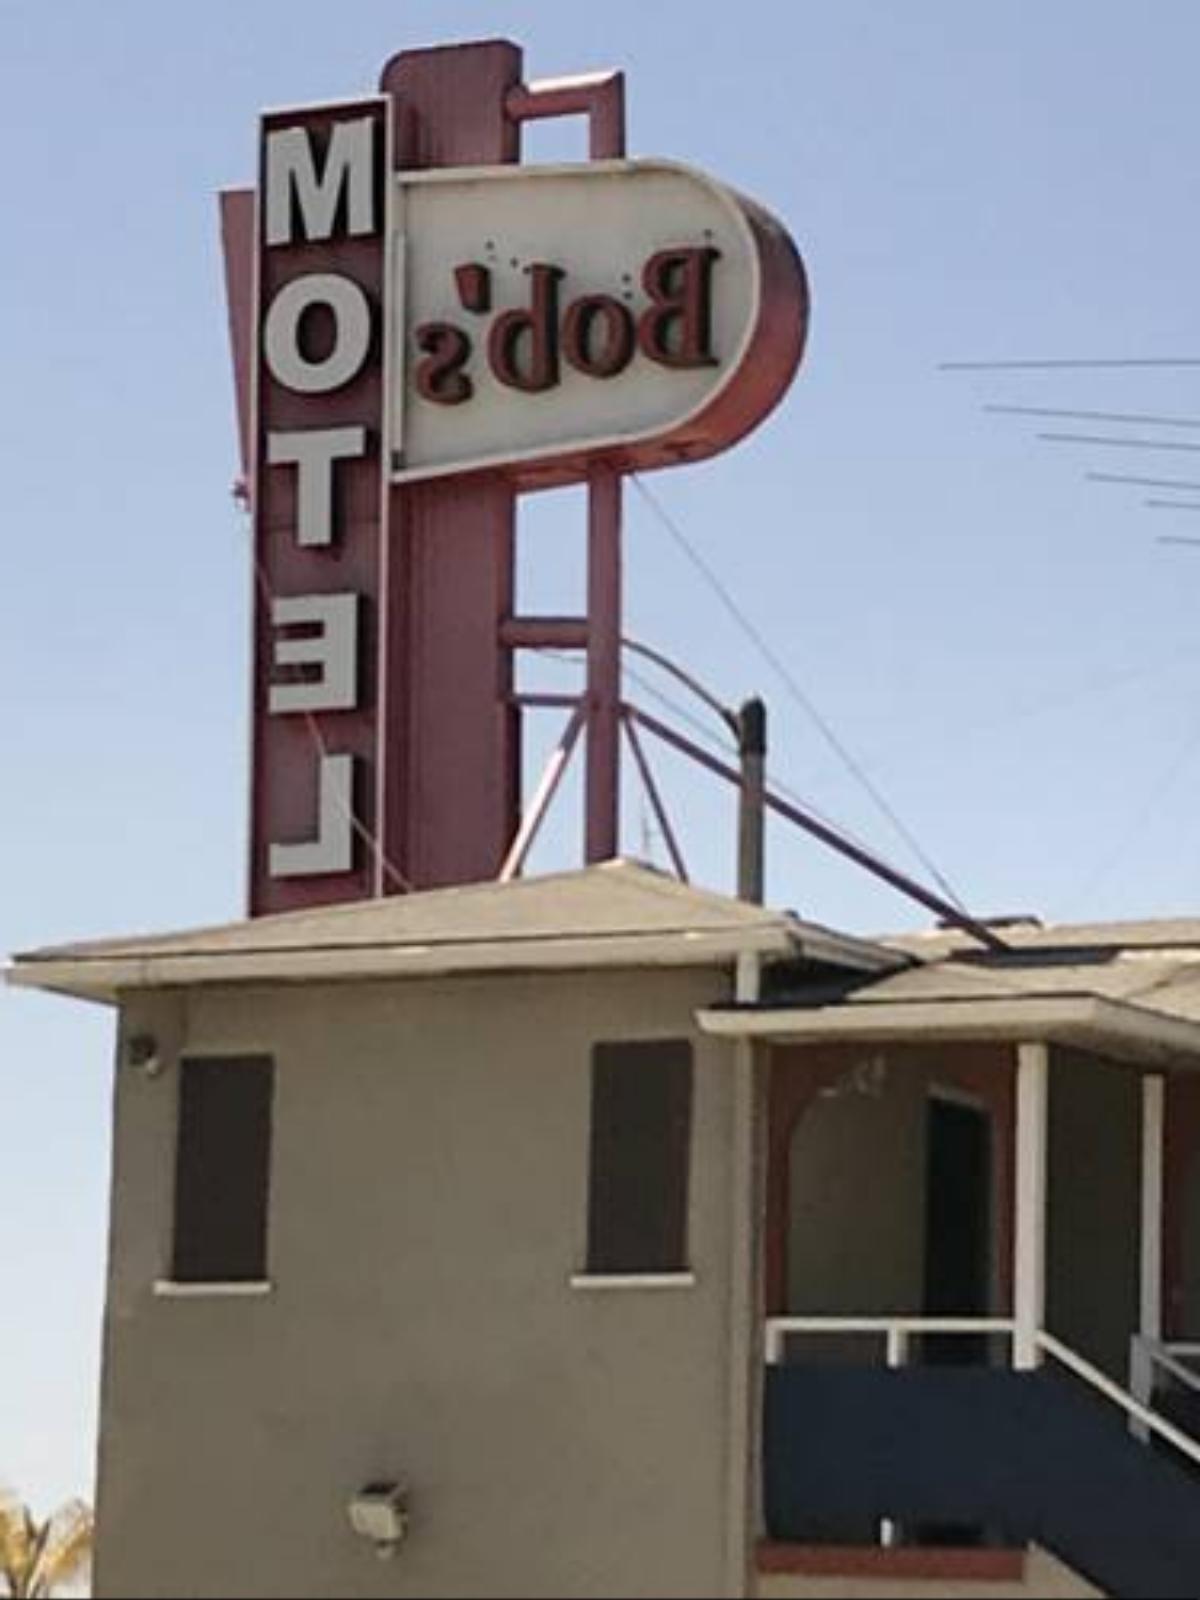 Bob’s Motel